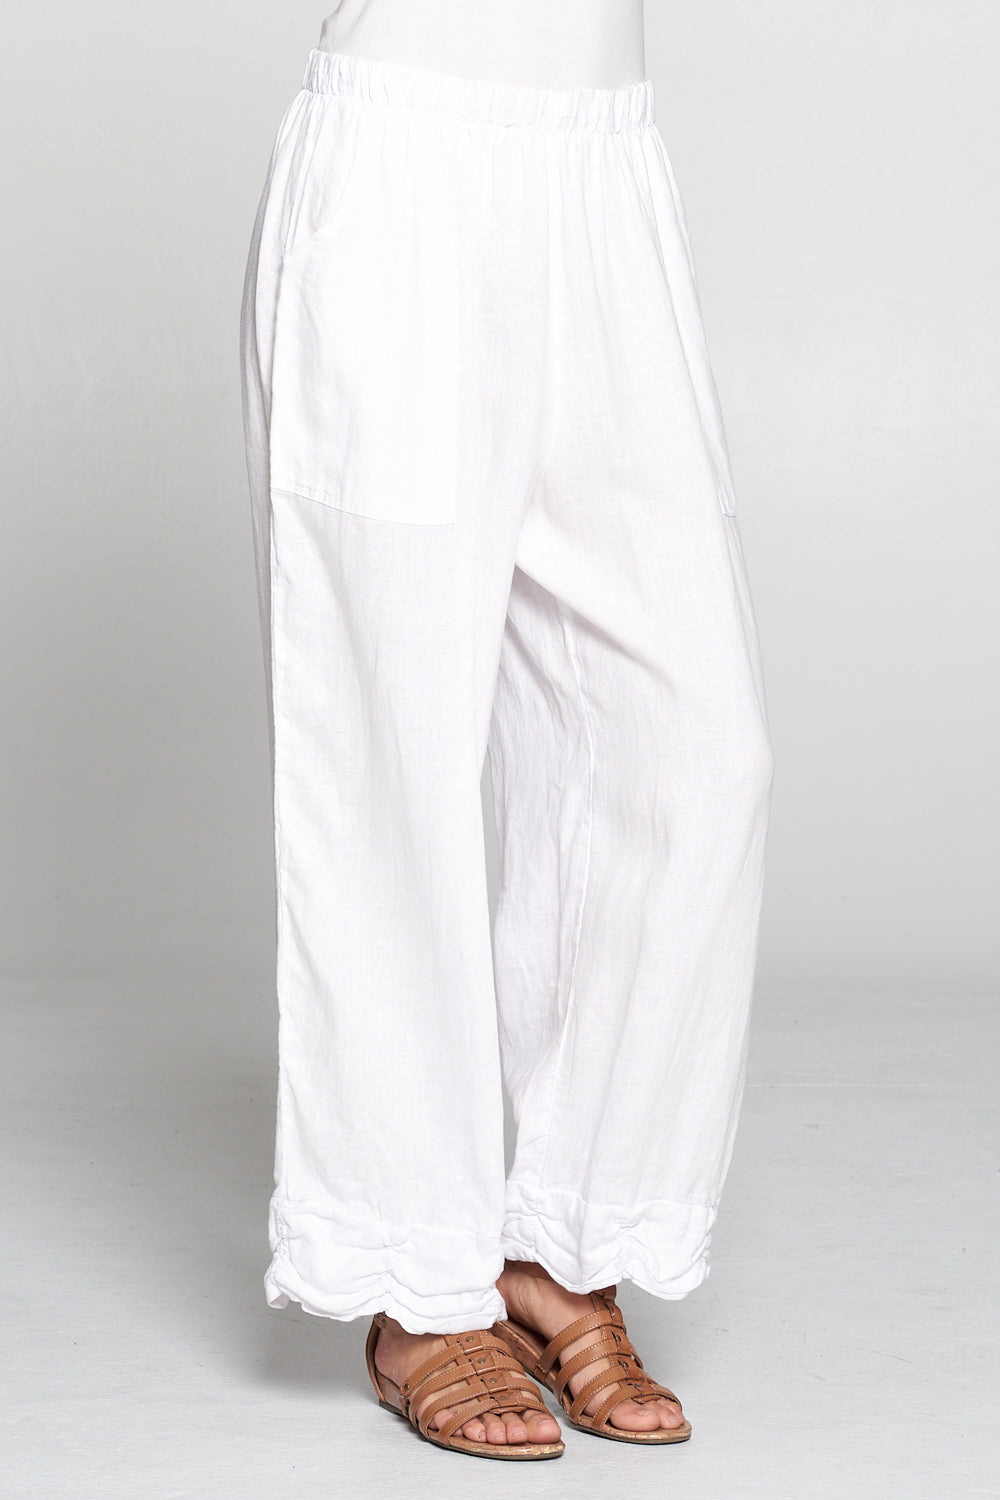 La Fixsun Linen Ruched Hem Pants FBP22 in white and silver (light